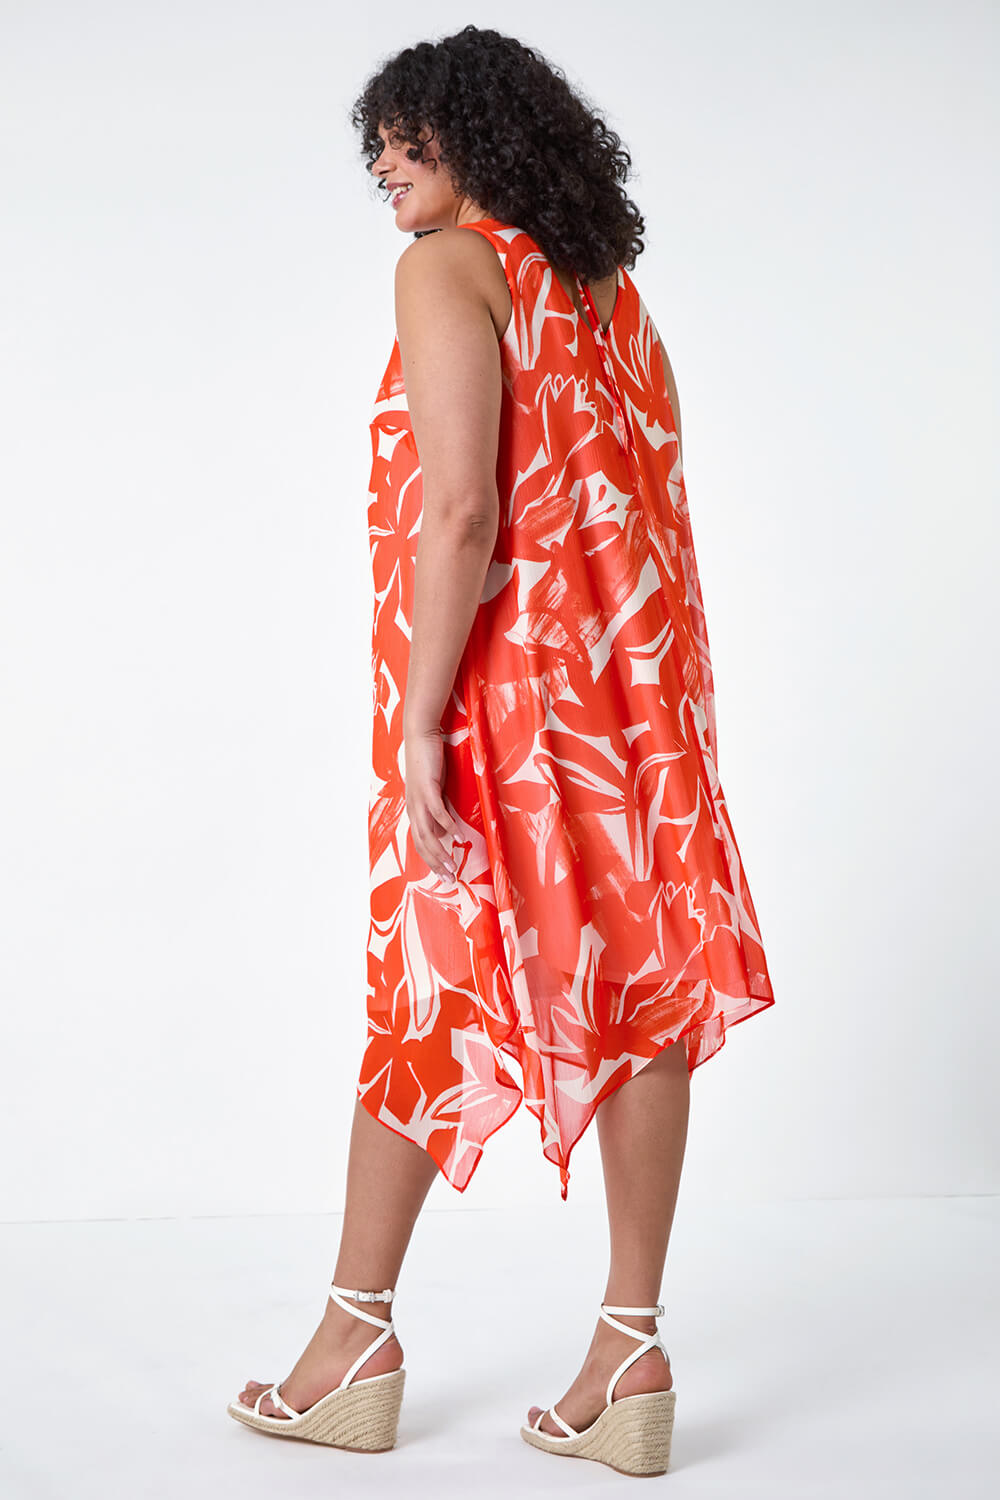 ORANGE Curve Abstract Print Chiffon Dress, Image 3 of 5